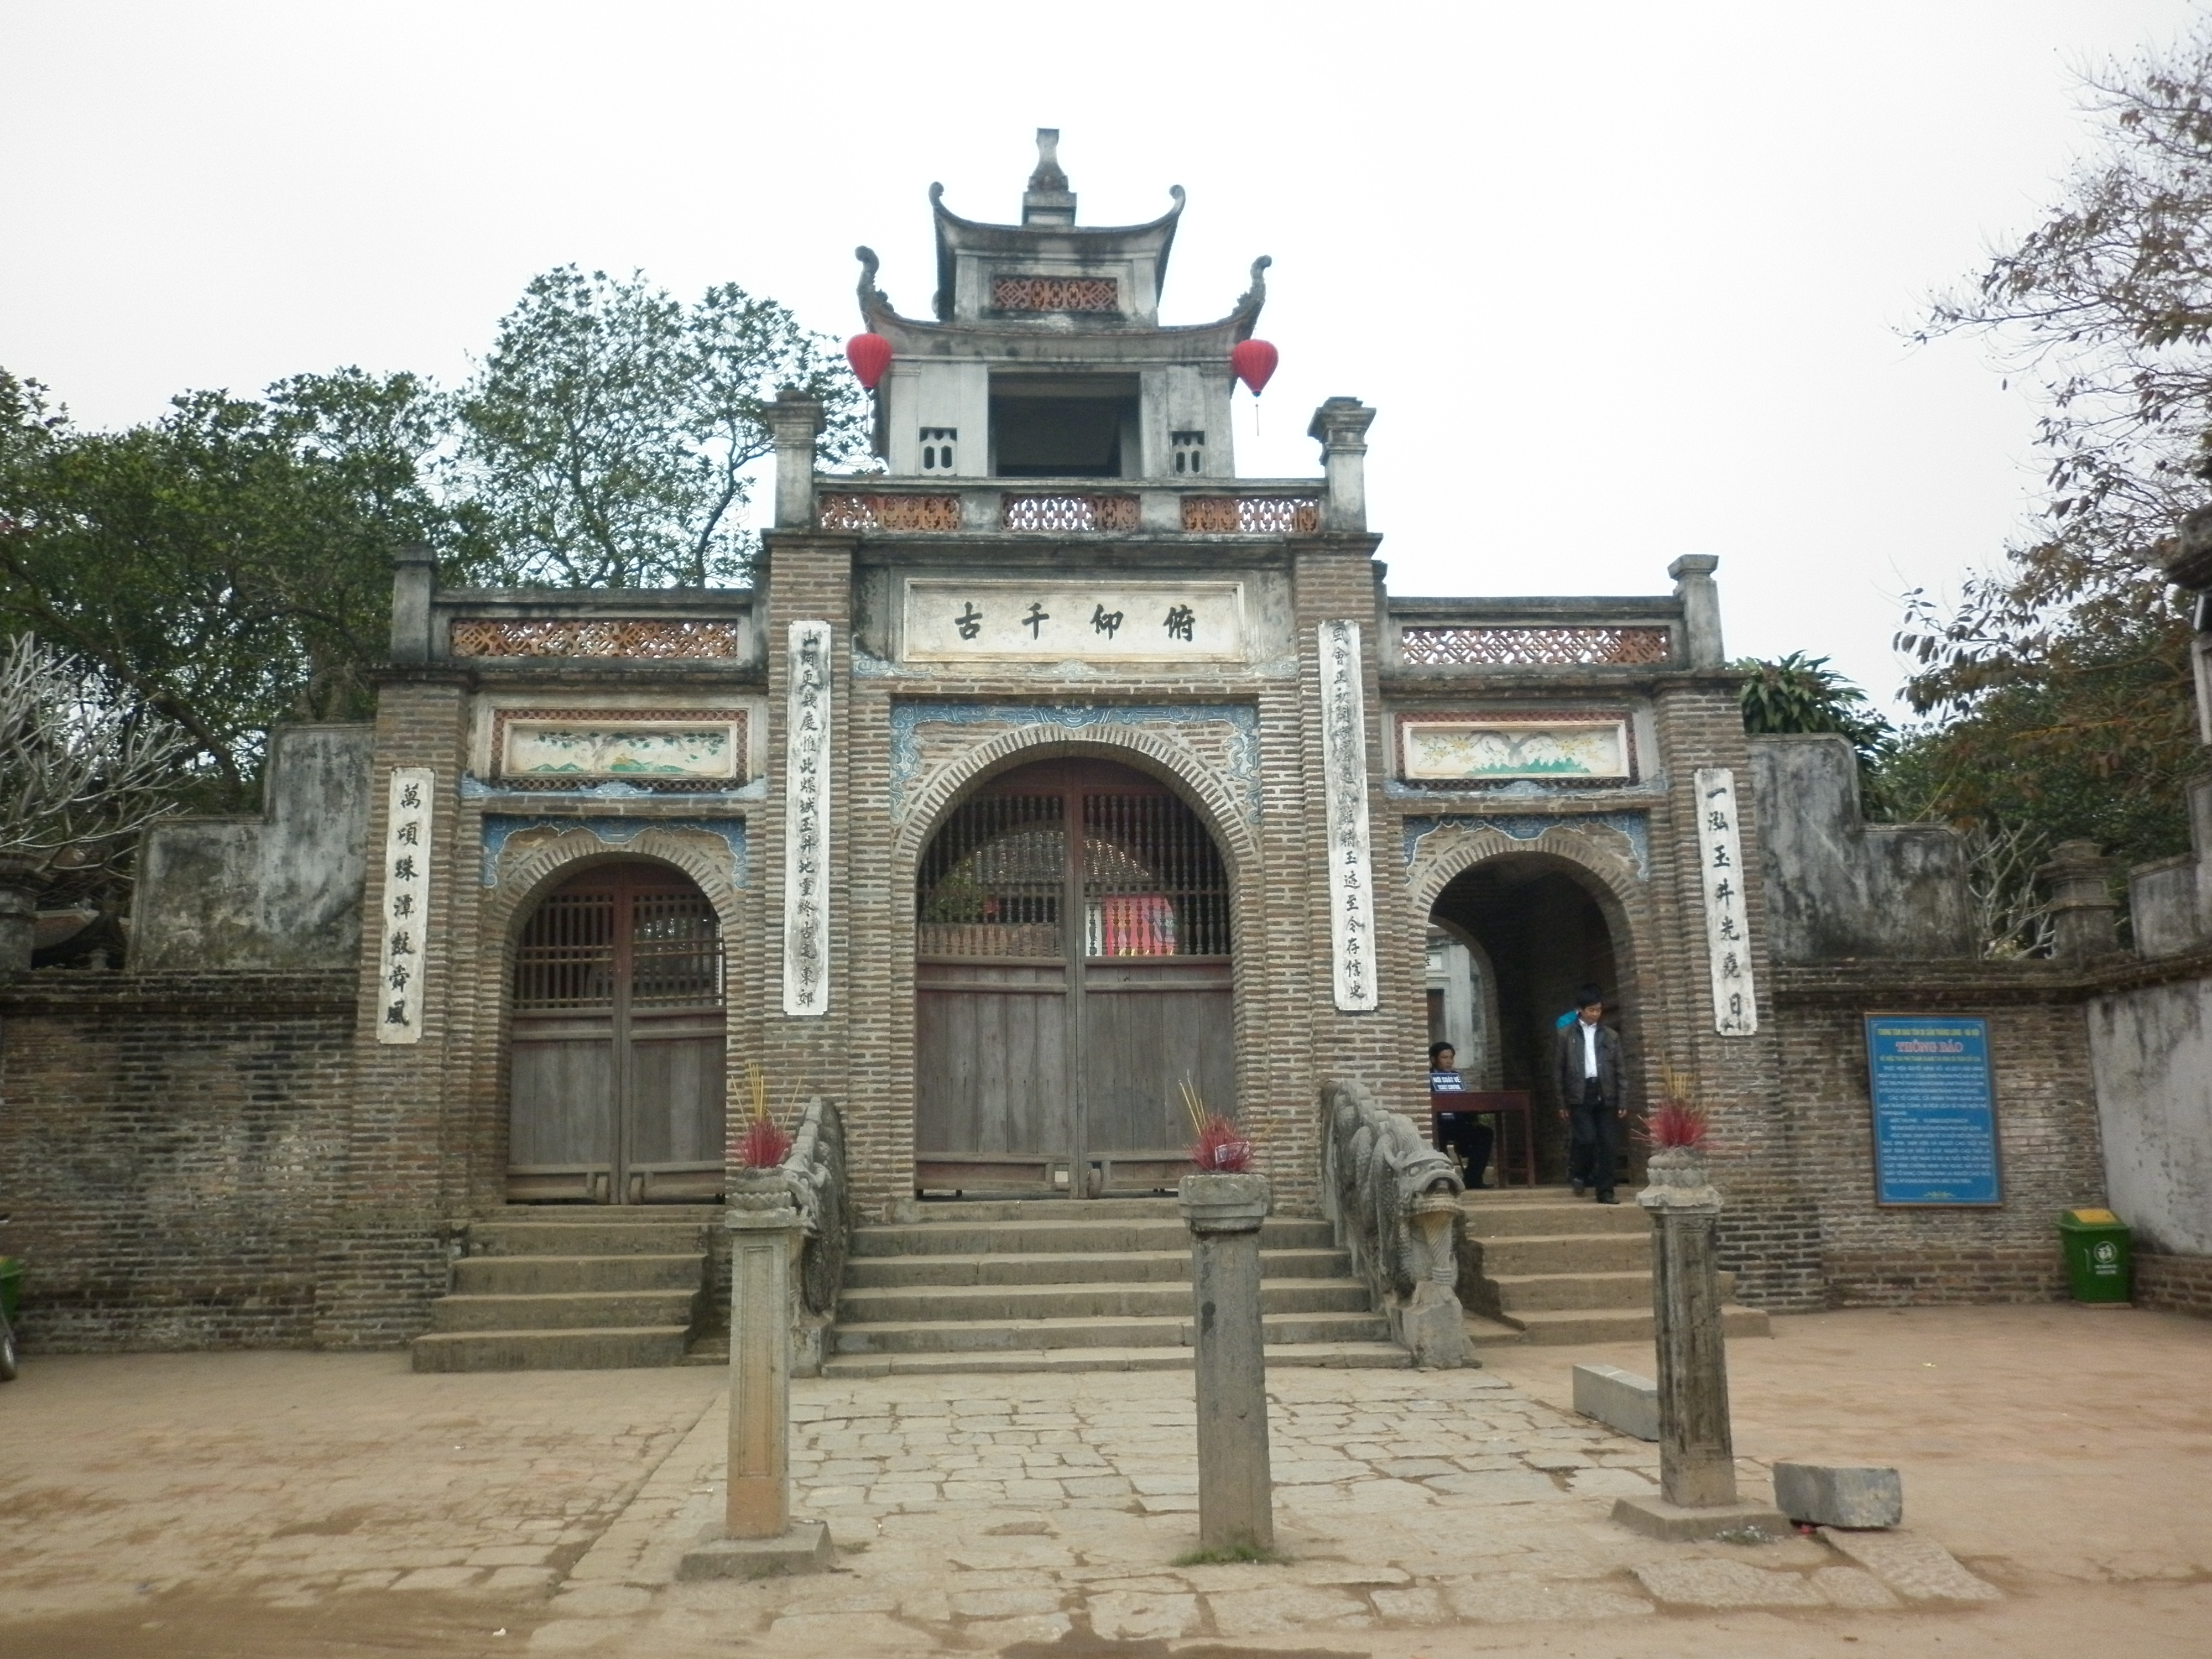 Co Loa ancient citadel relics in Hanoi city, Vietnam